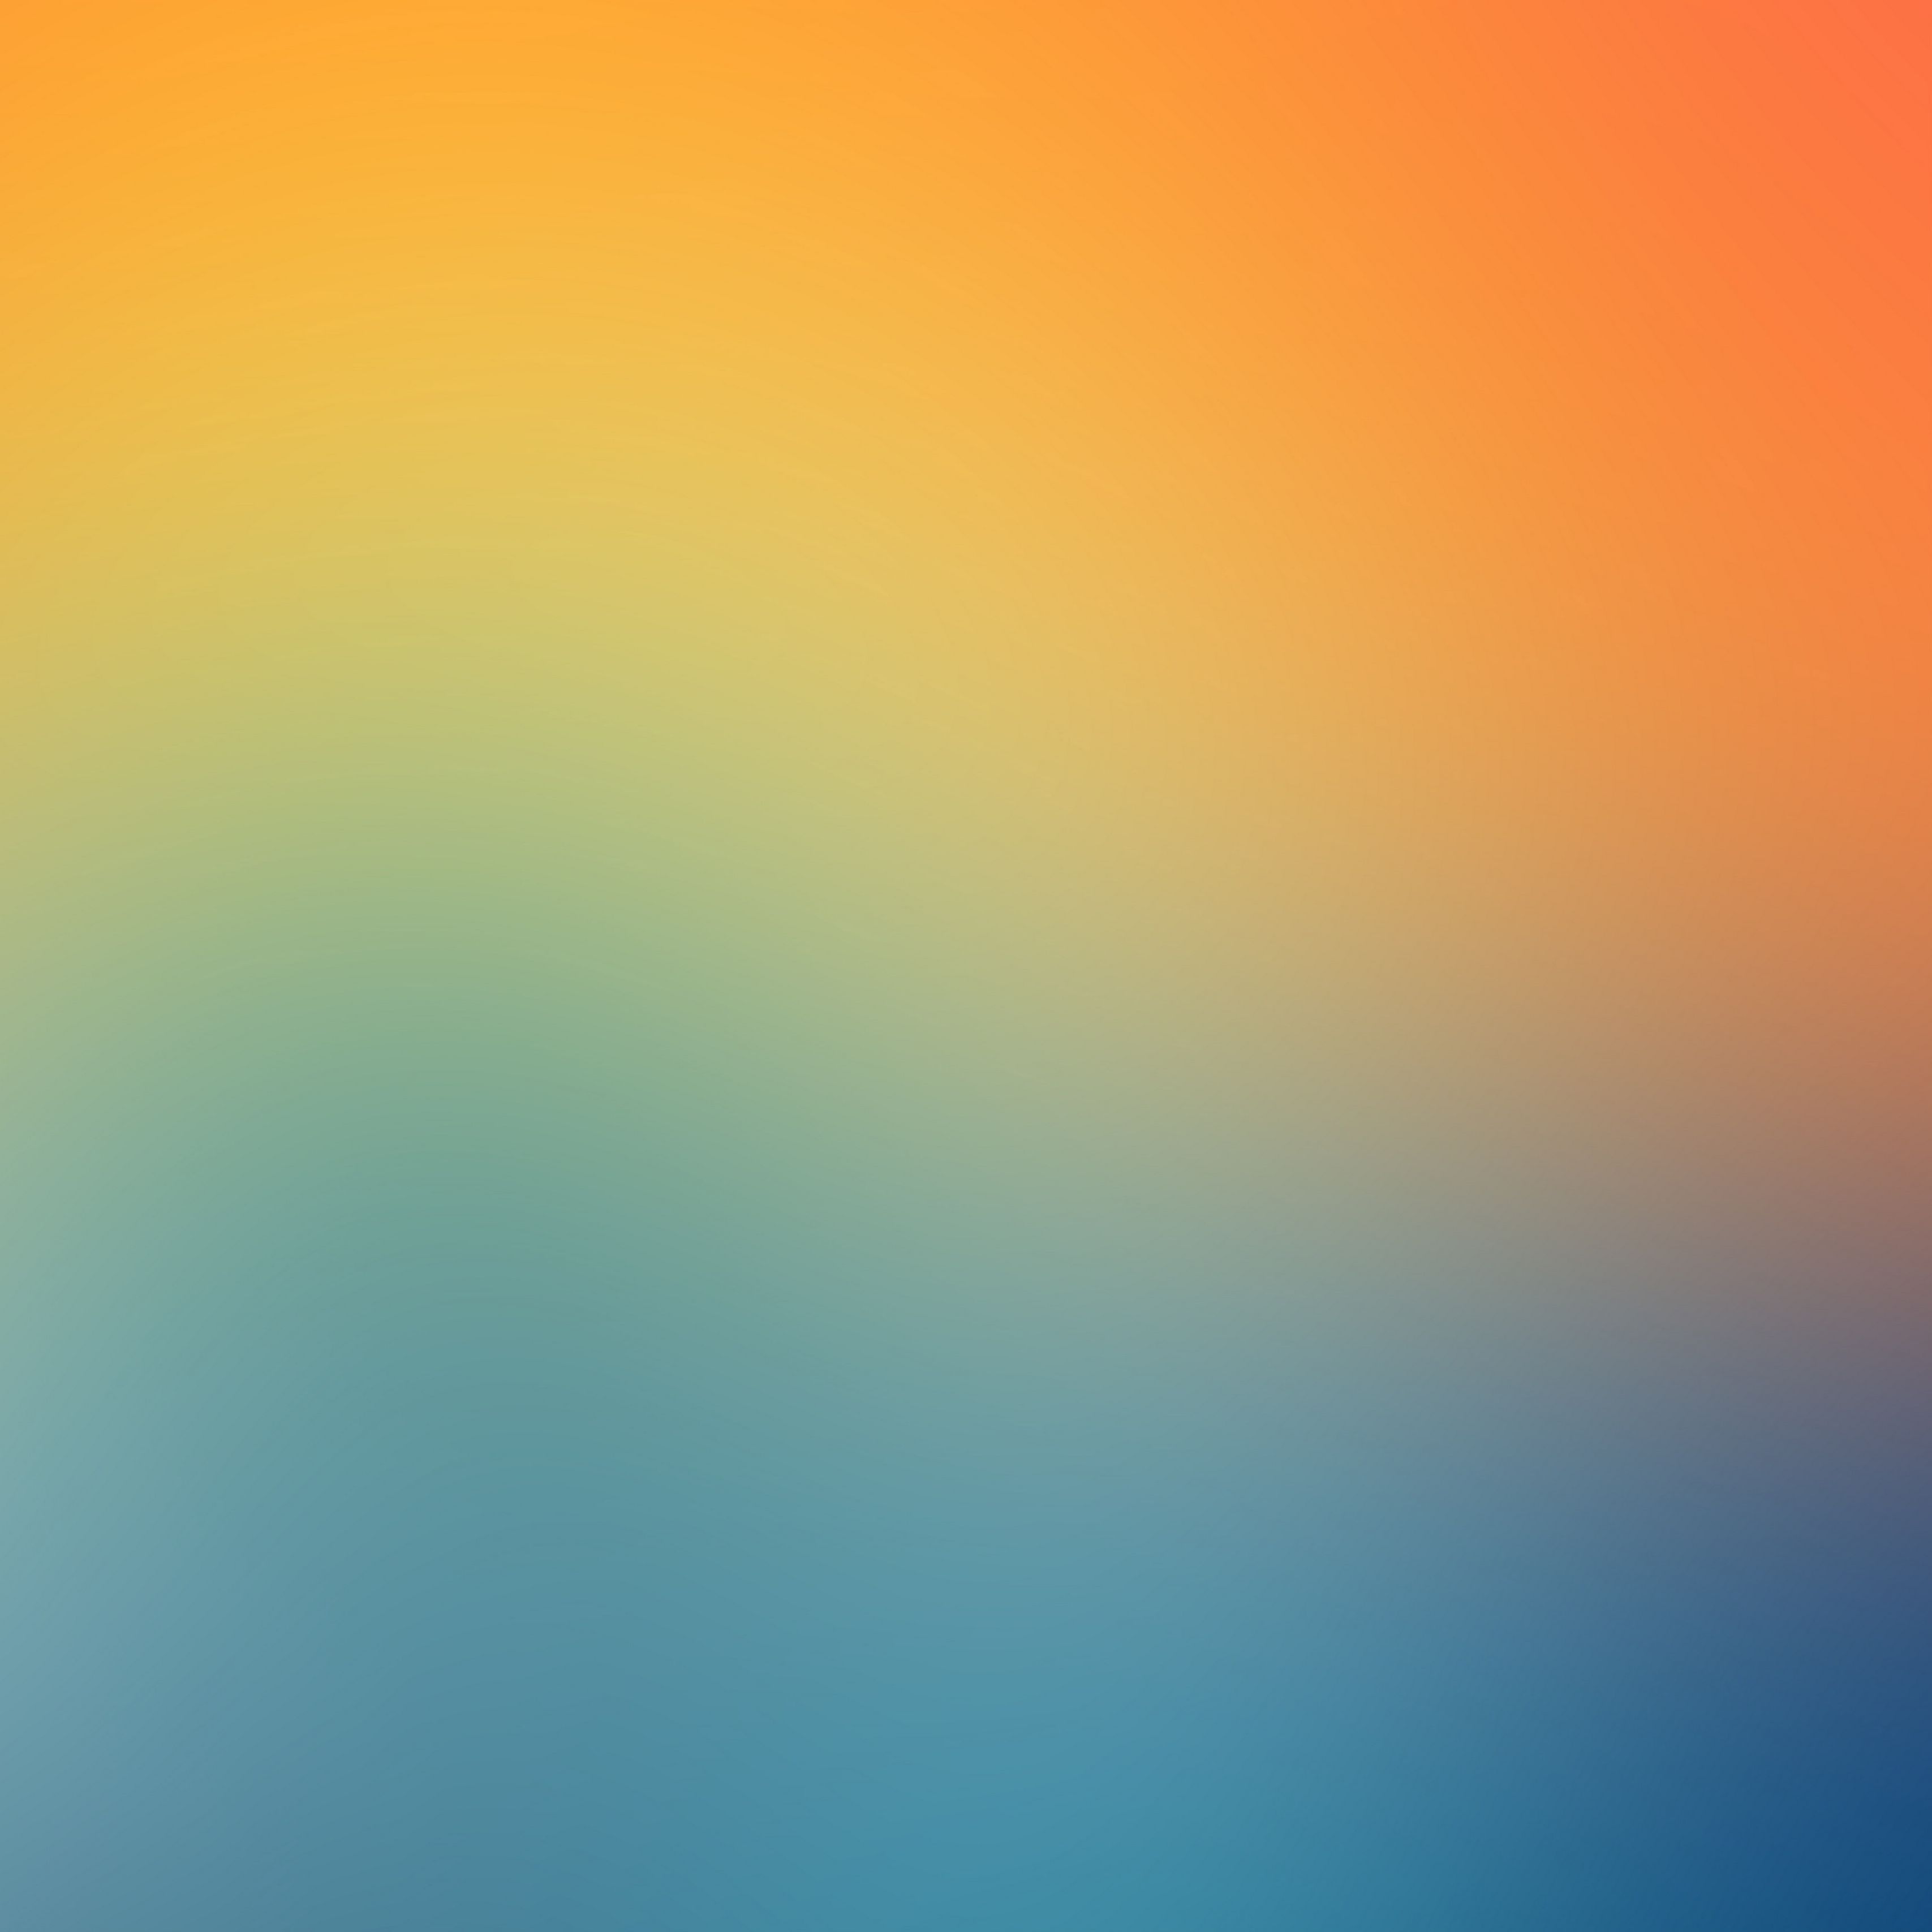 Download wallpaper 3415x3415 gradient, blur, blending, yellow, blue, soft ipad pro 12.9 retina for parallax HD background